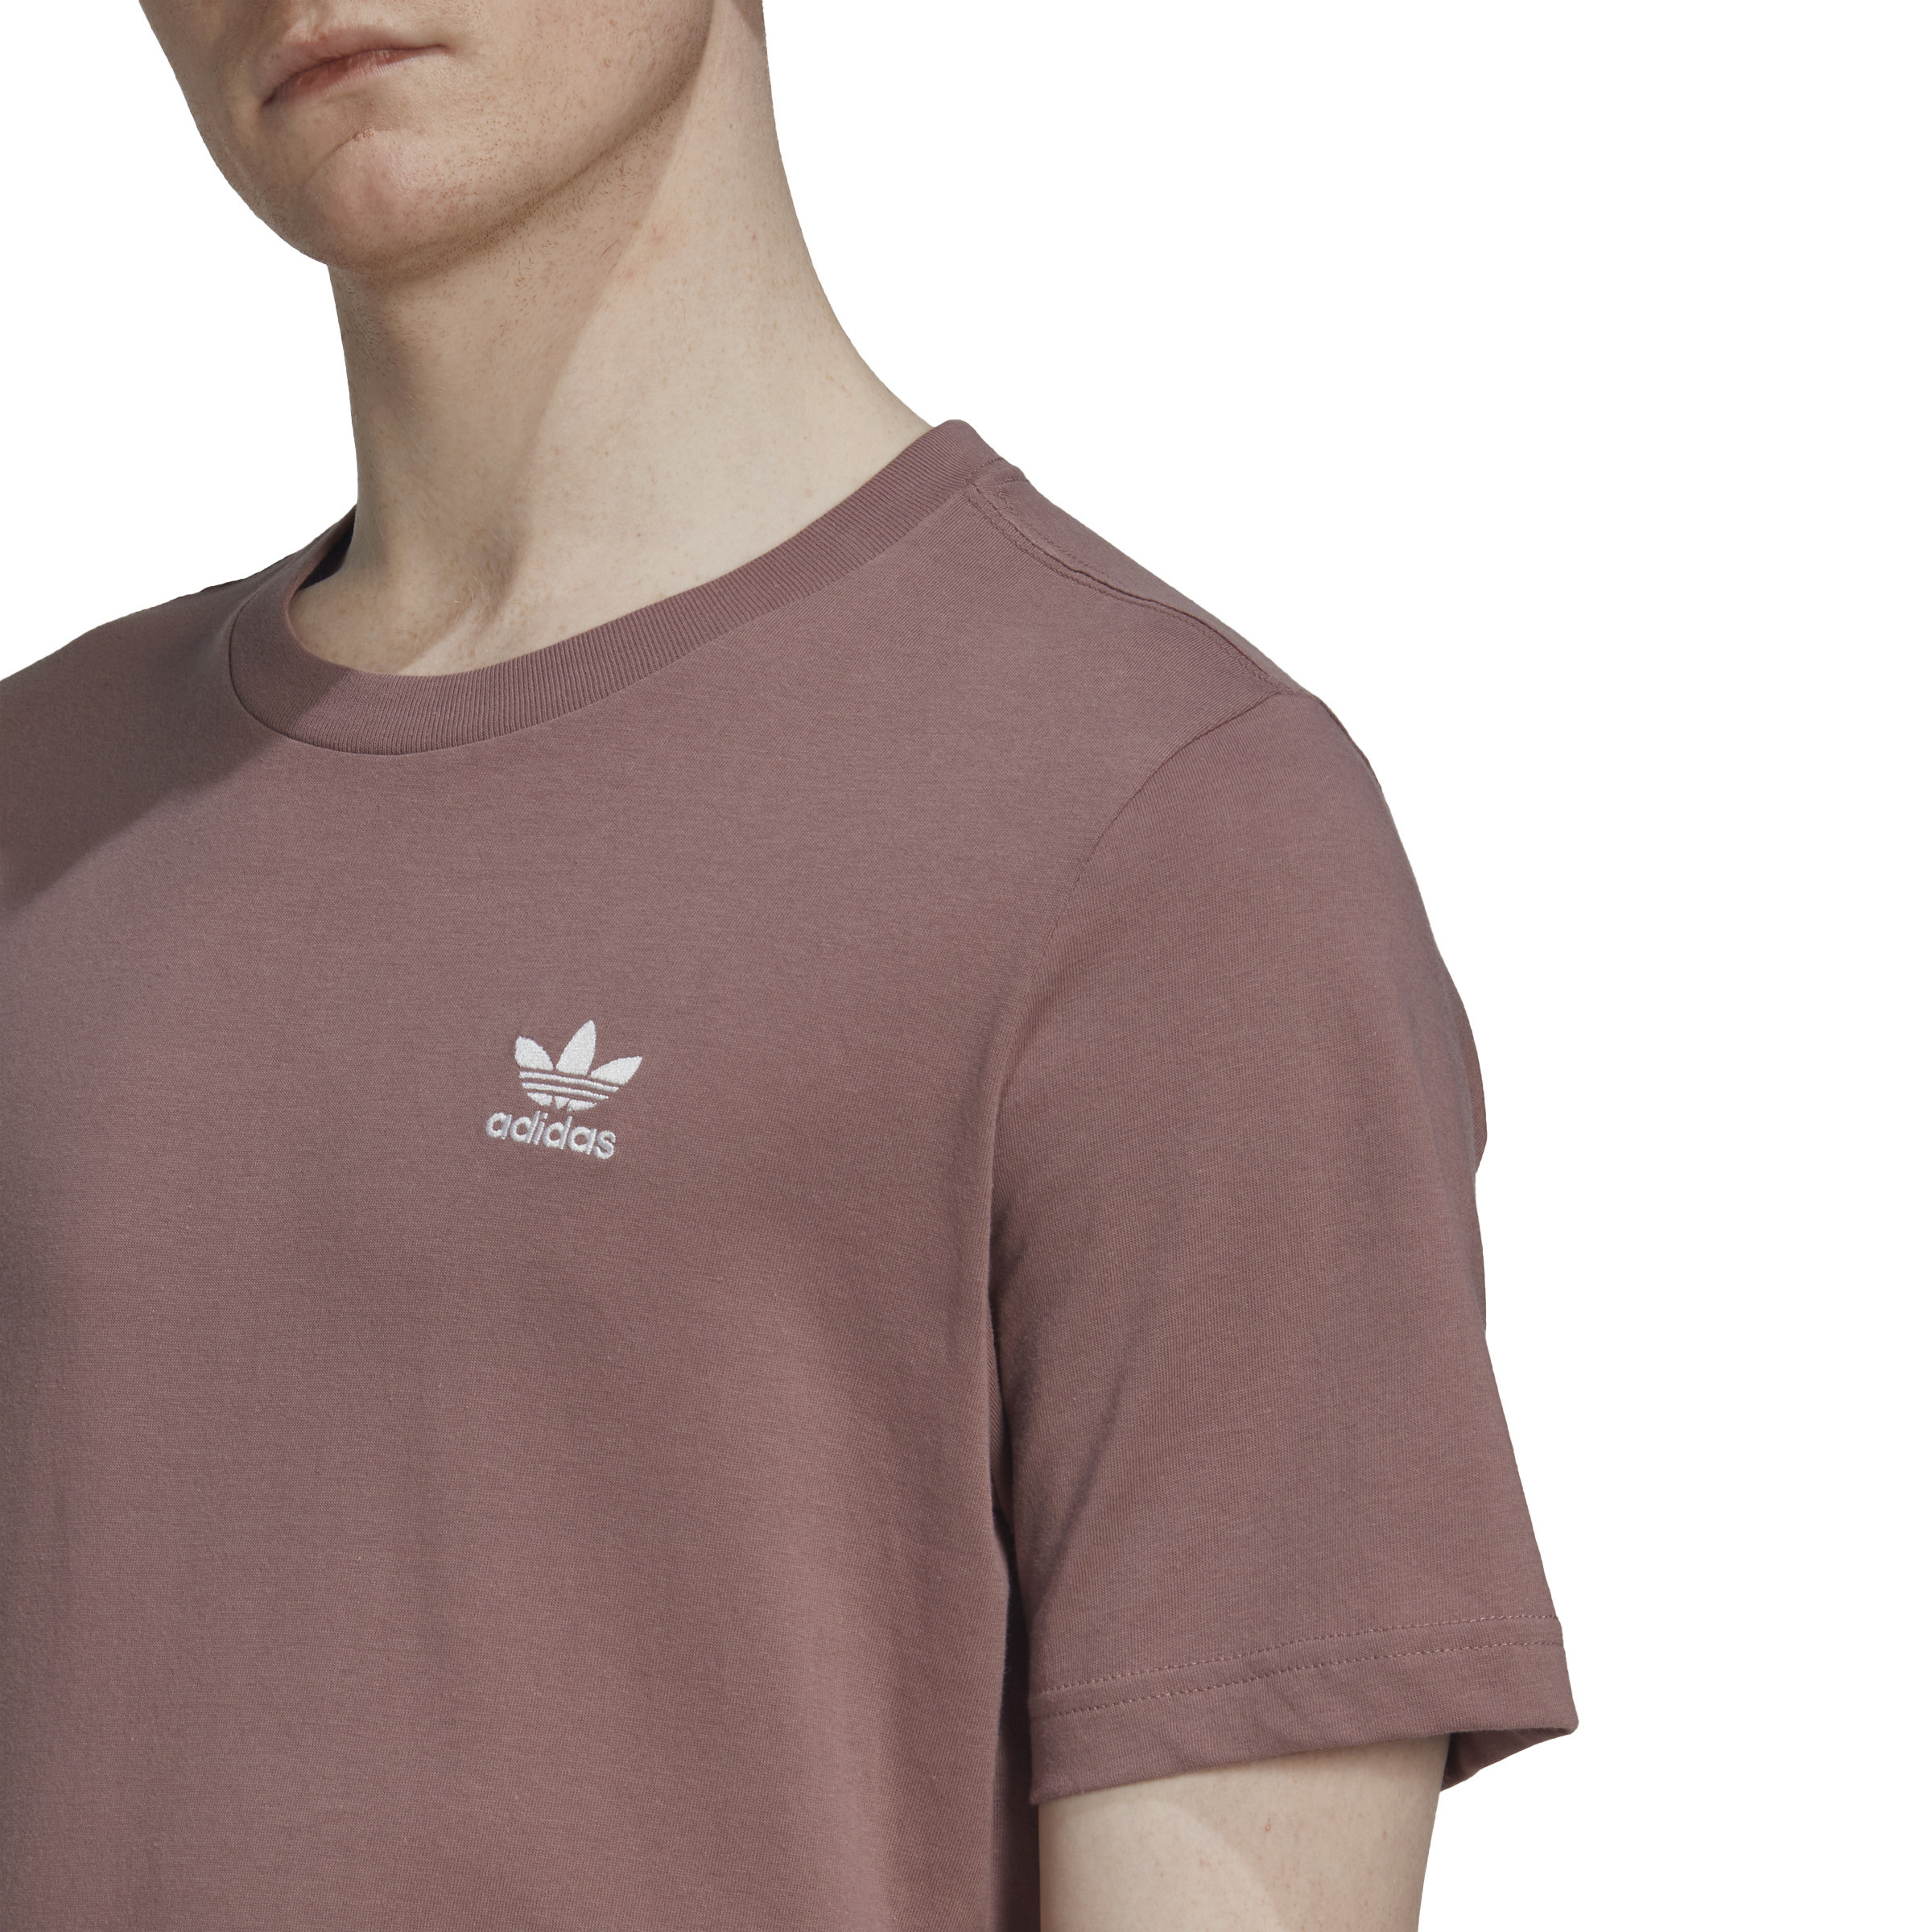 Adidas - Crewneck T-shirt with logo, Antique Pink, large image number 2